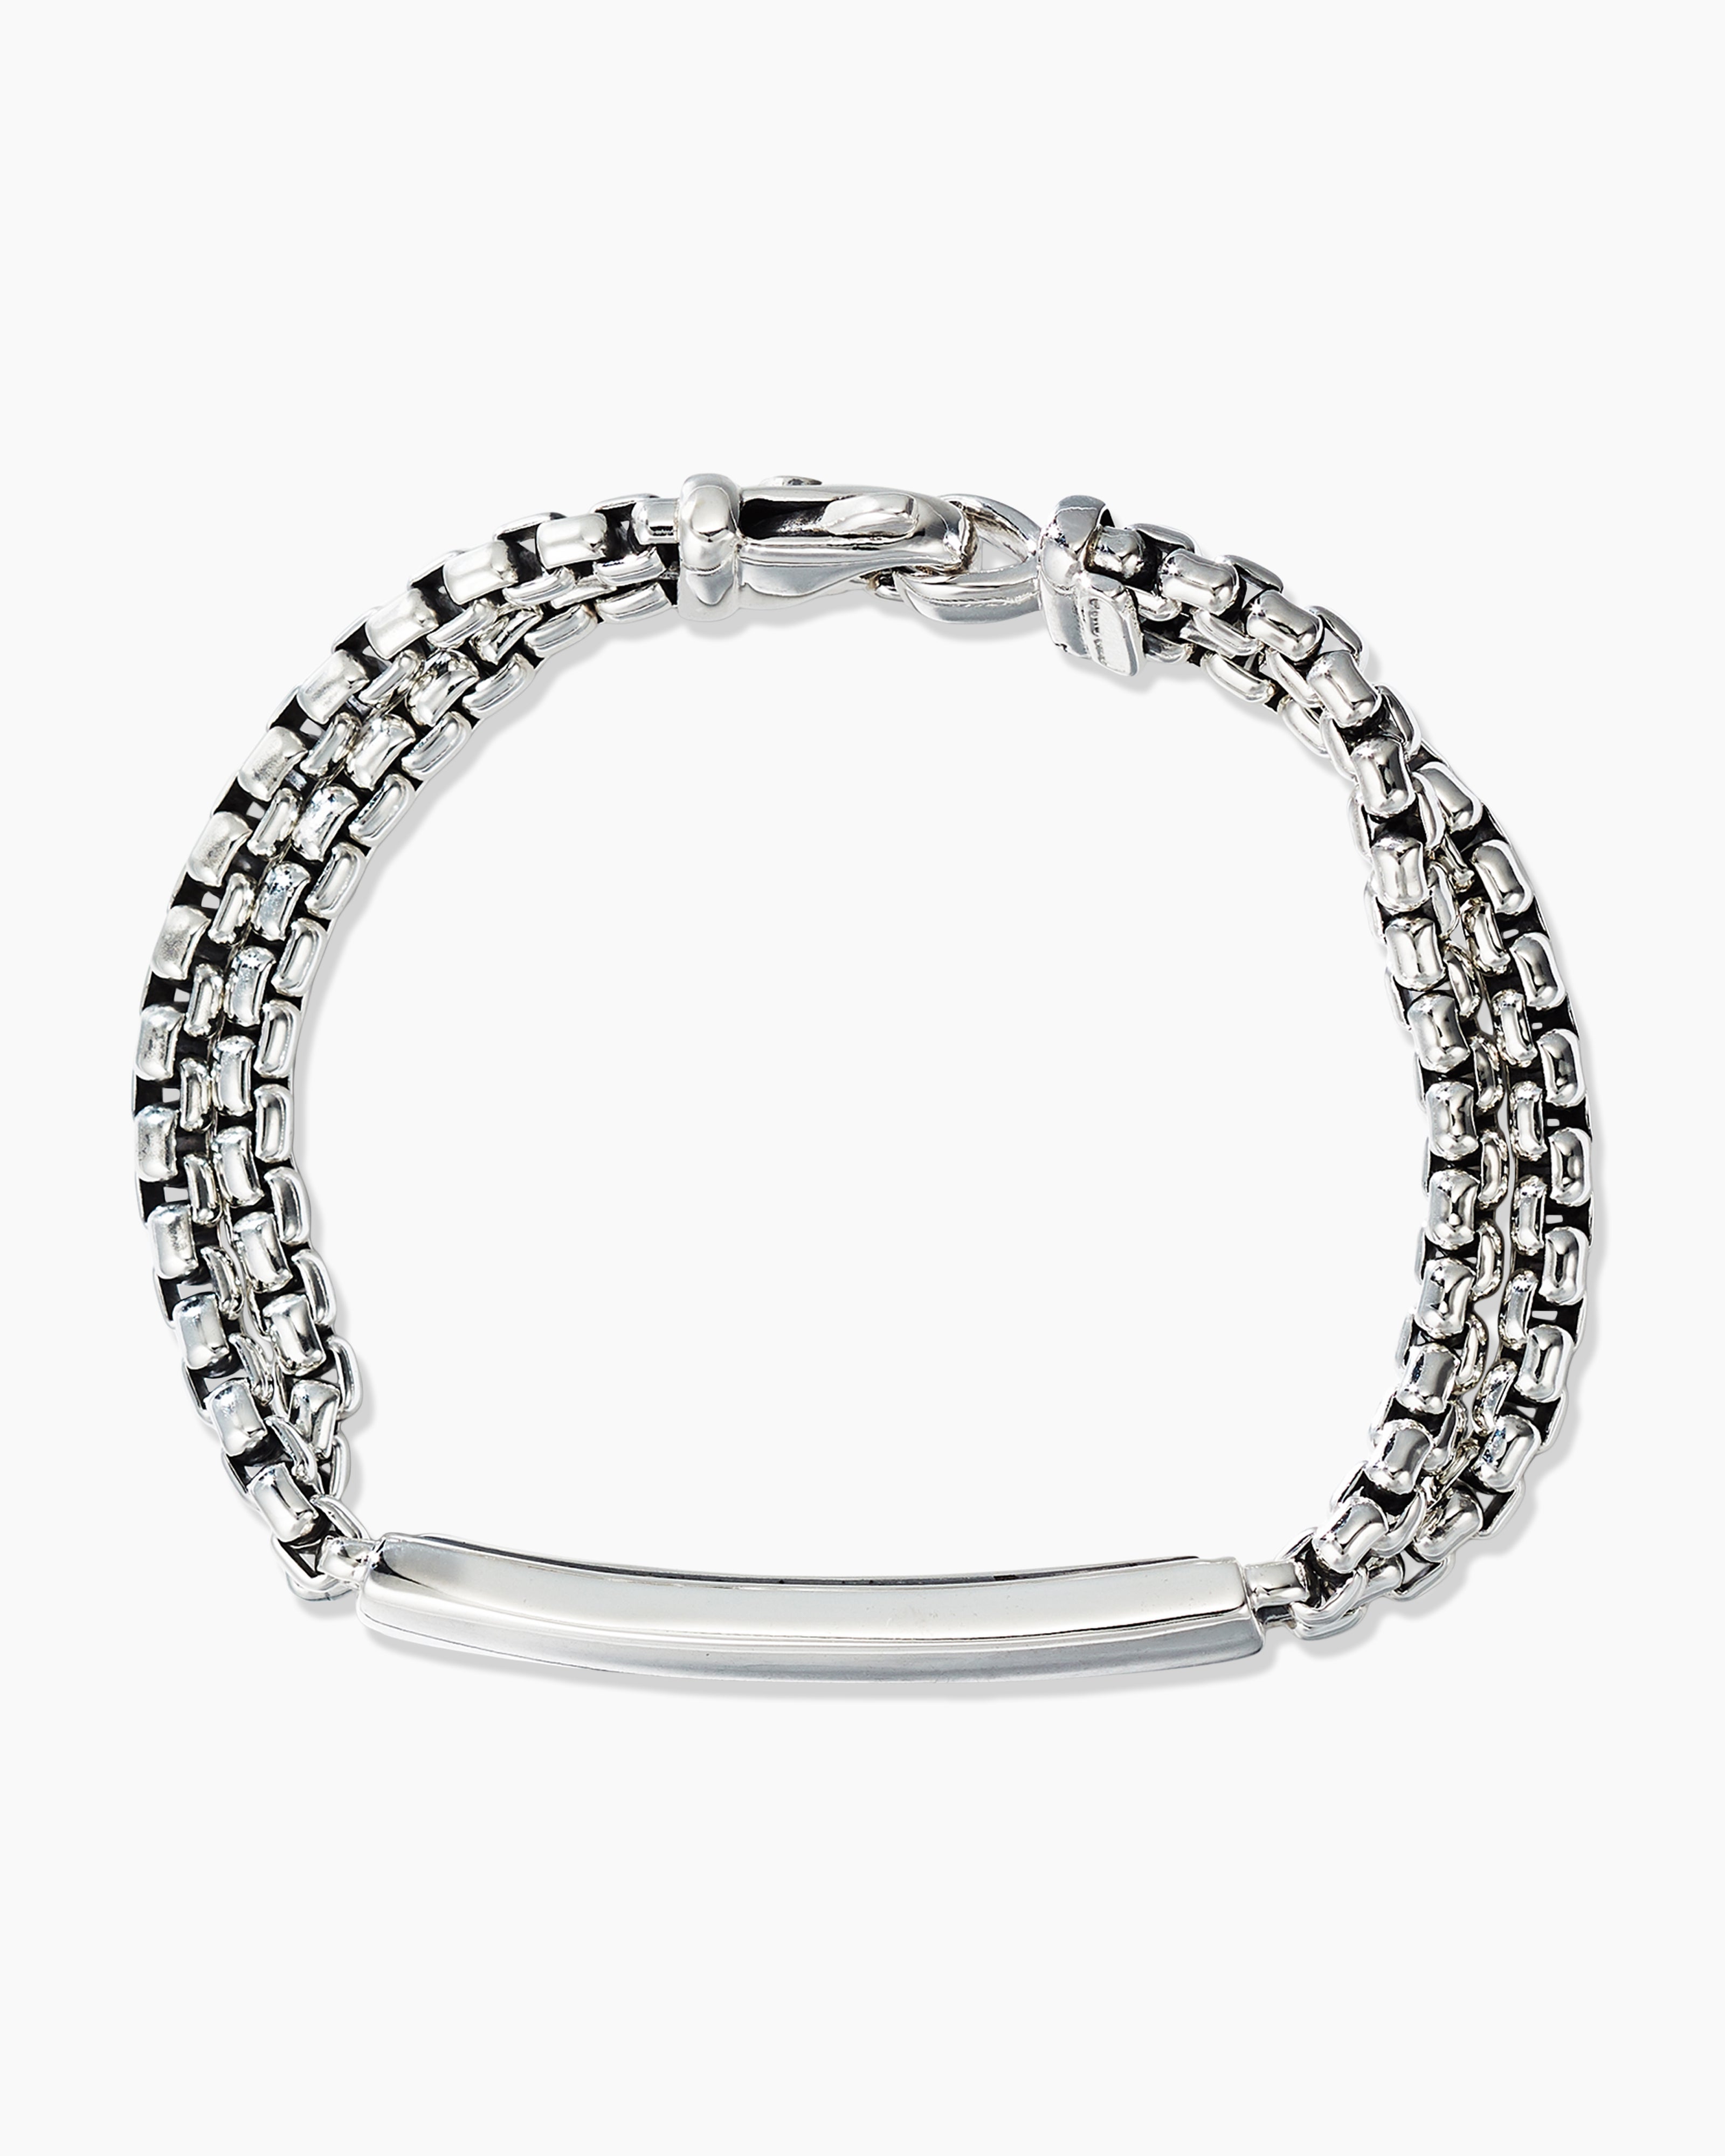 Stylish Platinum Cuff Bracelets for Men